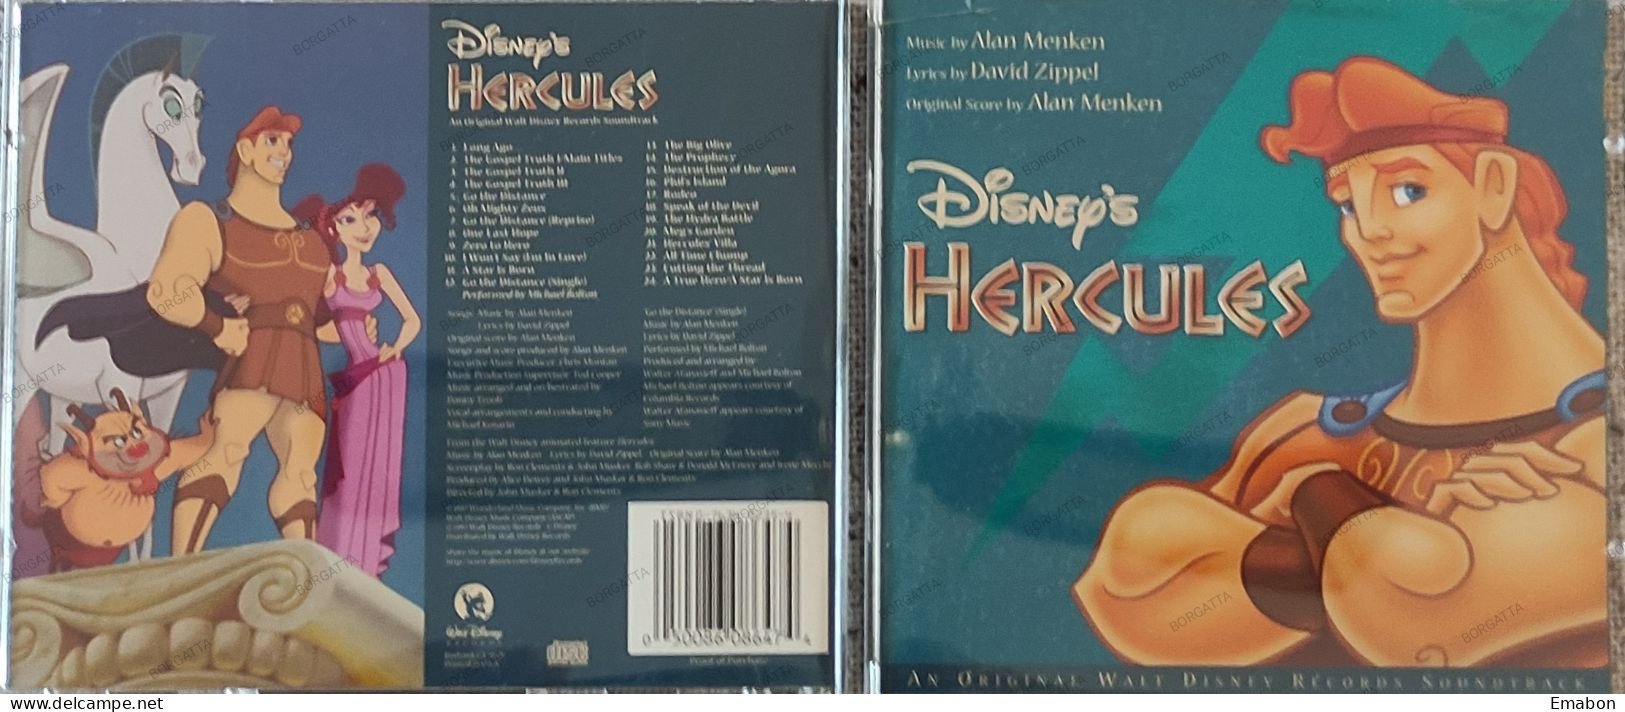 BORGATTA - FILM MUSIC - Cd ALAN MENKEN - HERCULES - WALT DISNEY RECORDS 1997 - USATO In Buono Stato - Soundtracks, Film Music